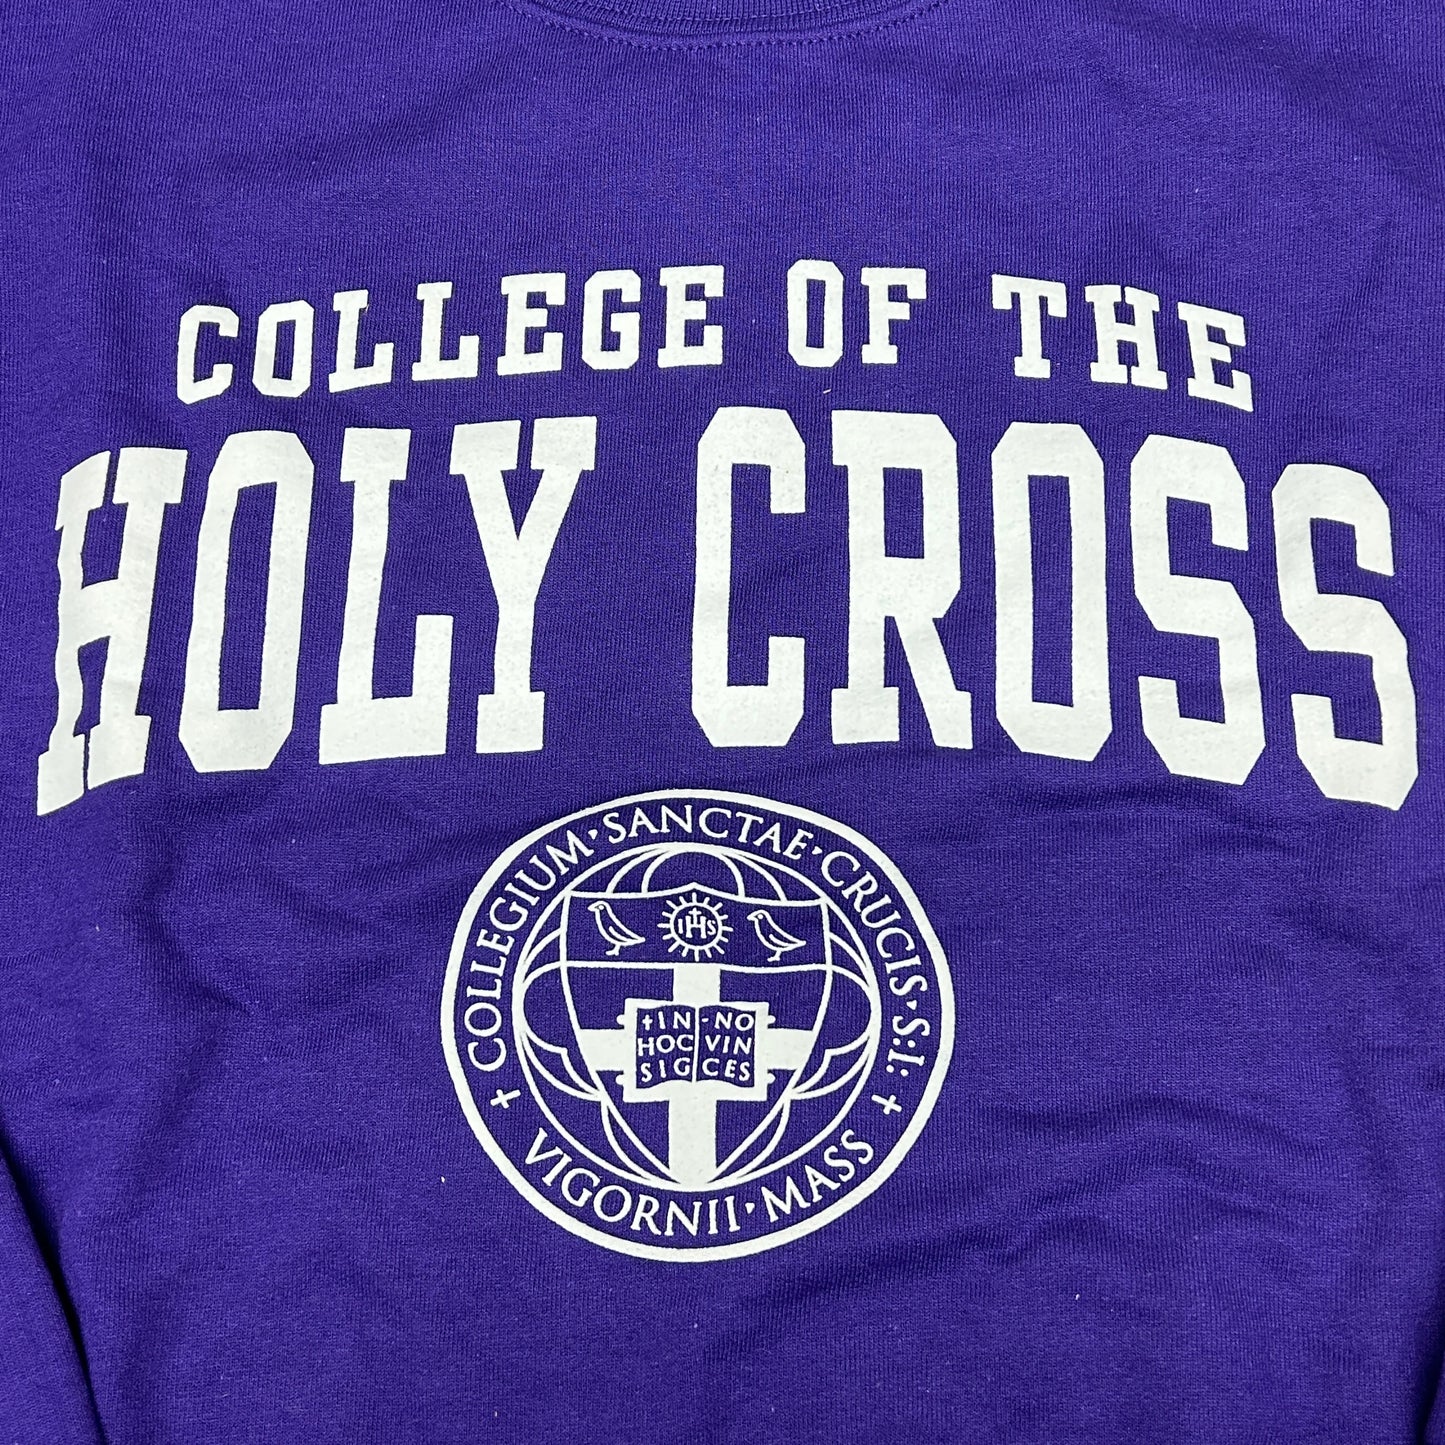 GILDAN College of the Holy Cross Heritage Heavy Cotton Crewneck Sz 2XL Purple (New)